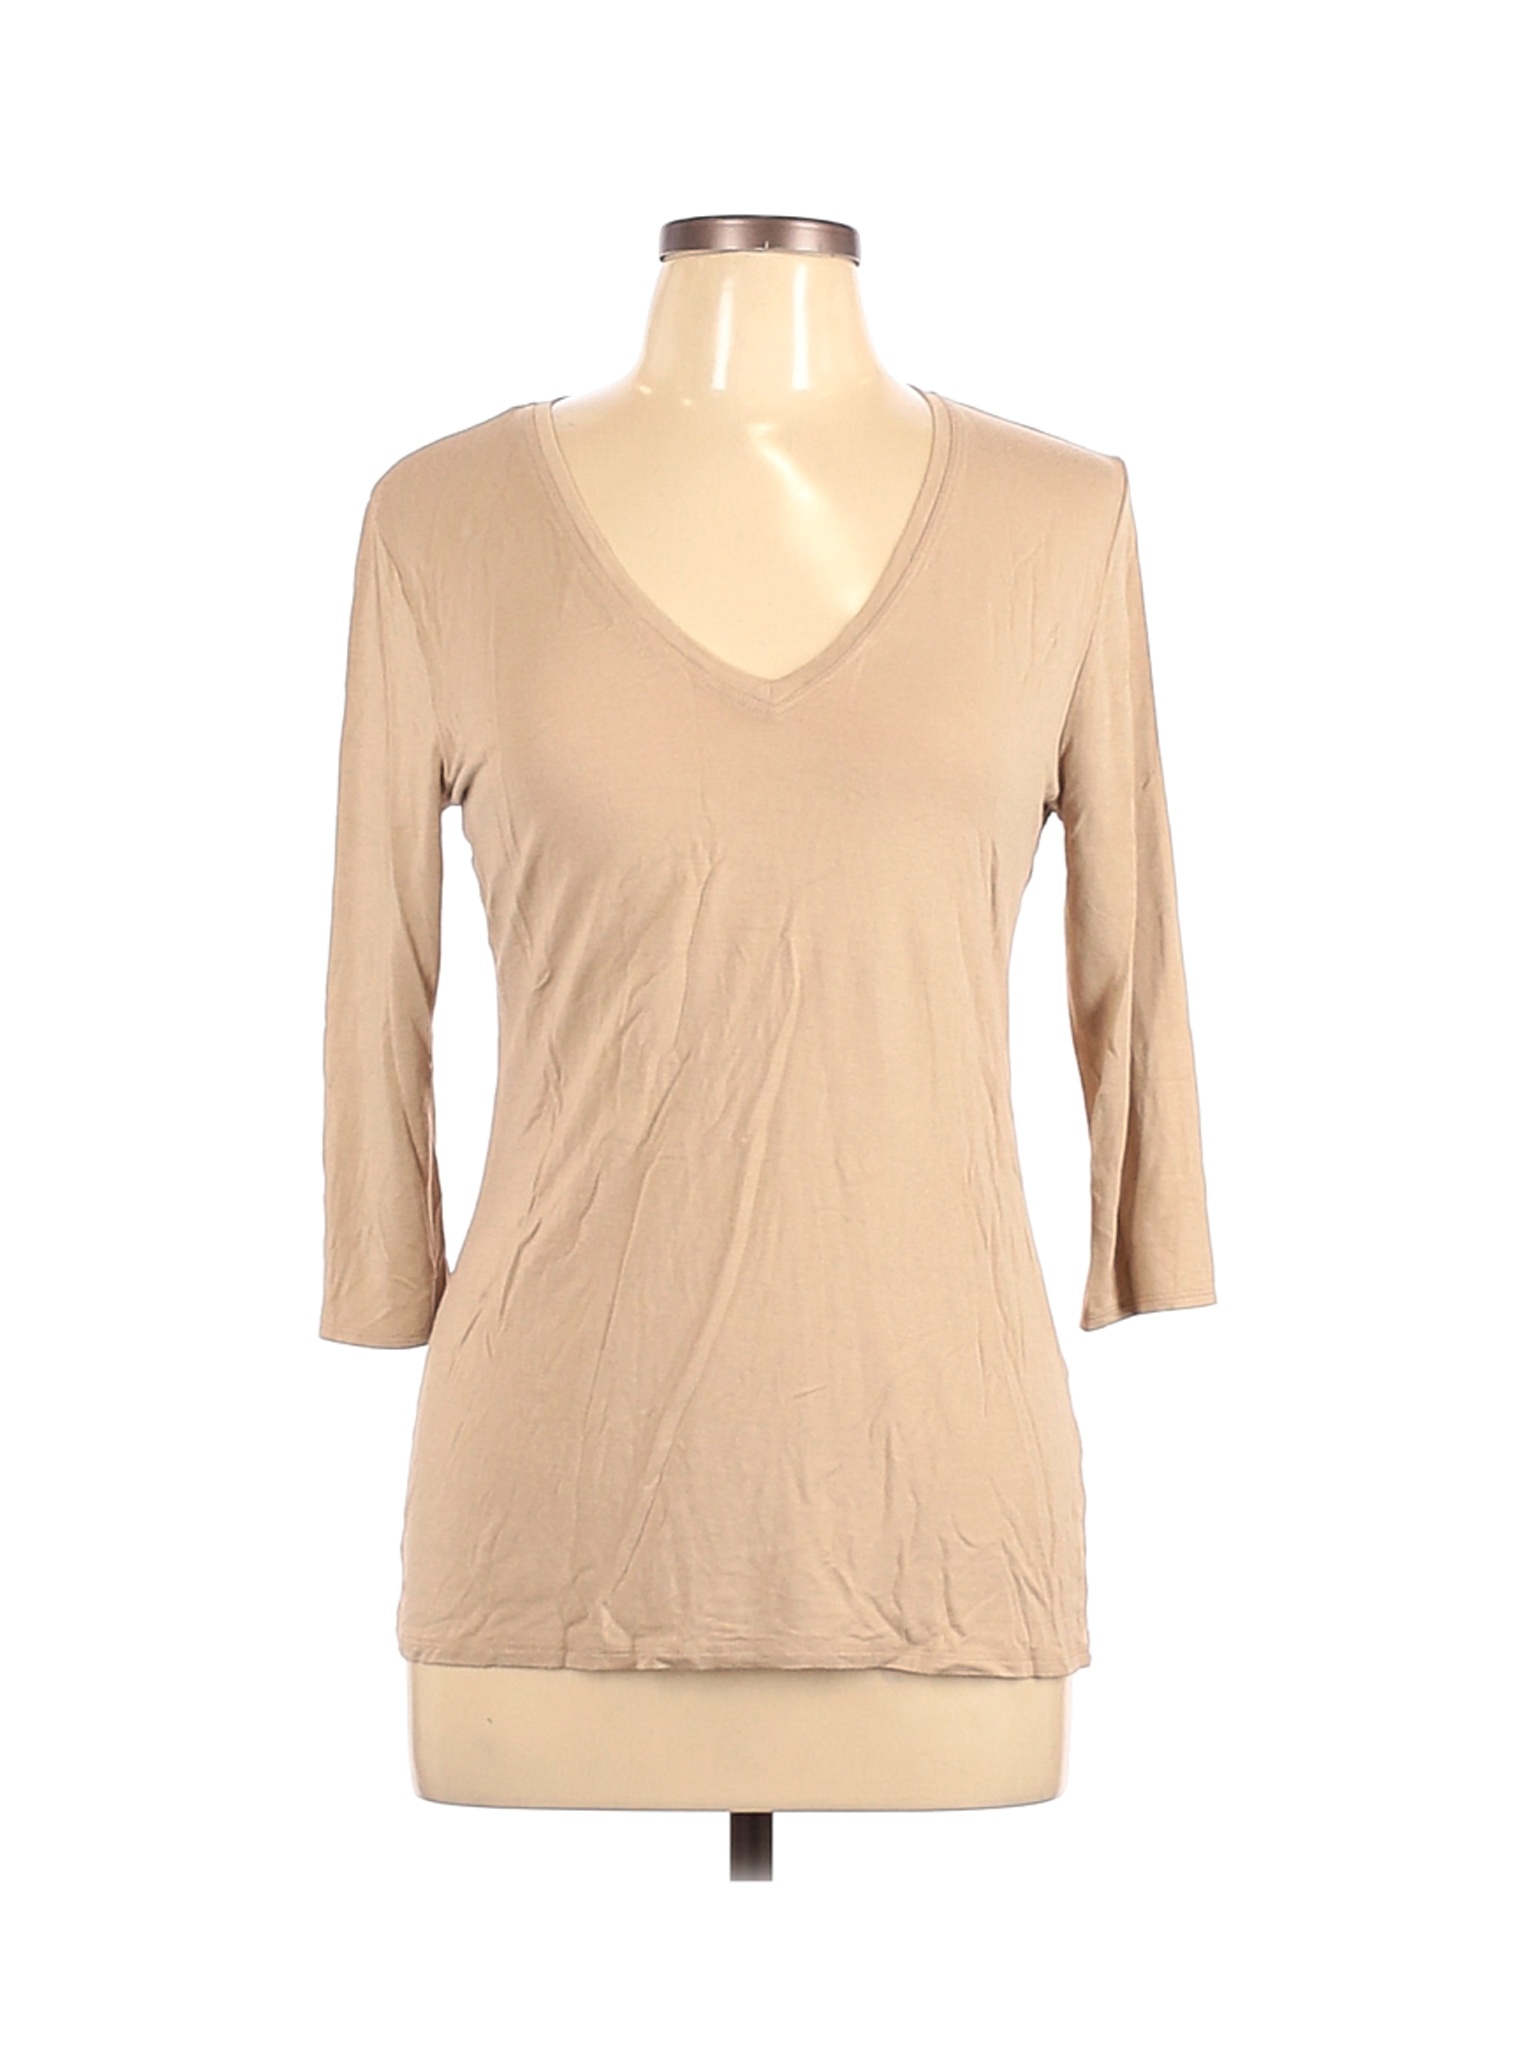 Tahari Women Brown Long Sleeve T-Shirt L | eBay